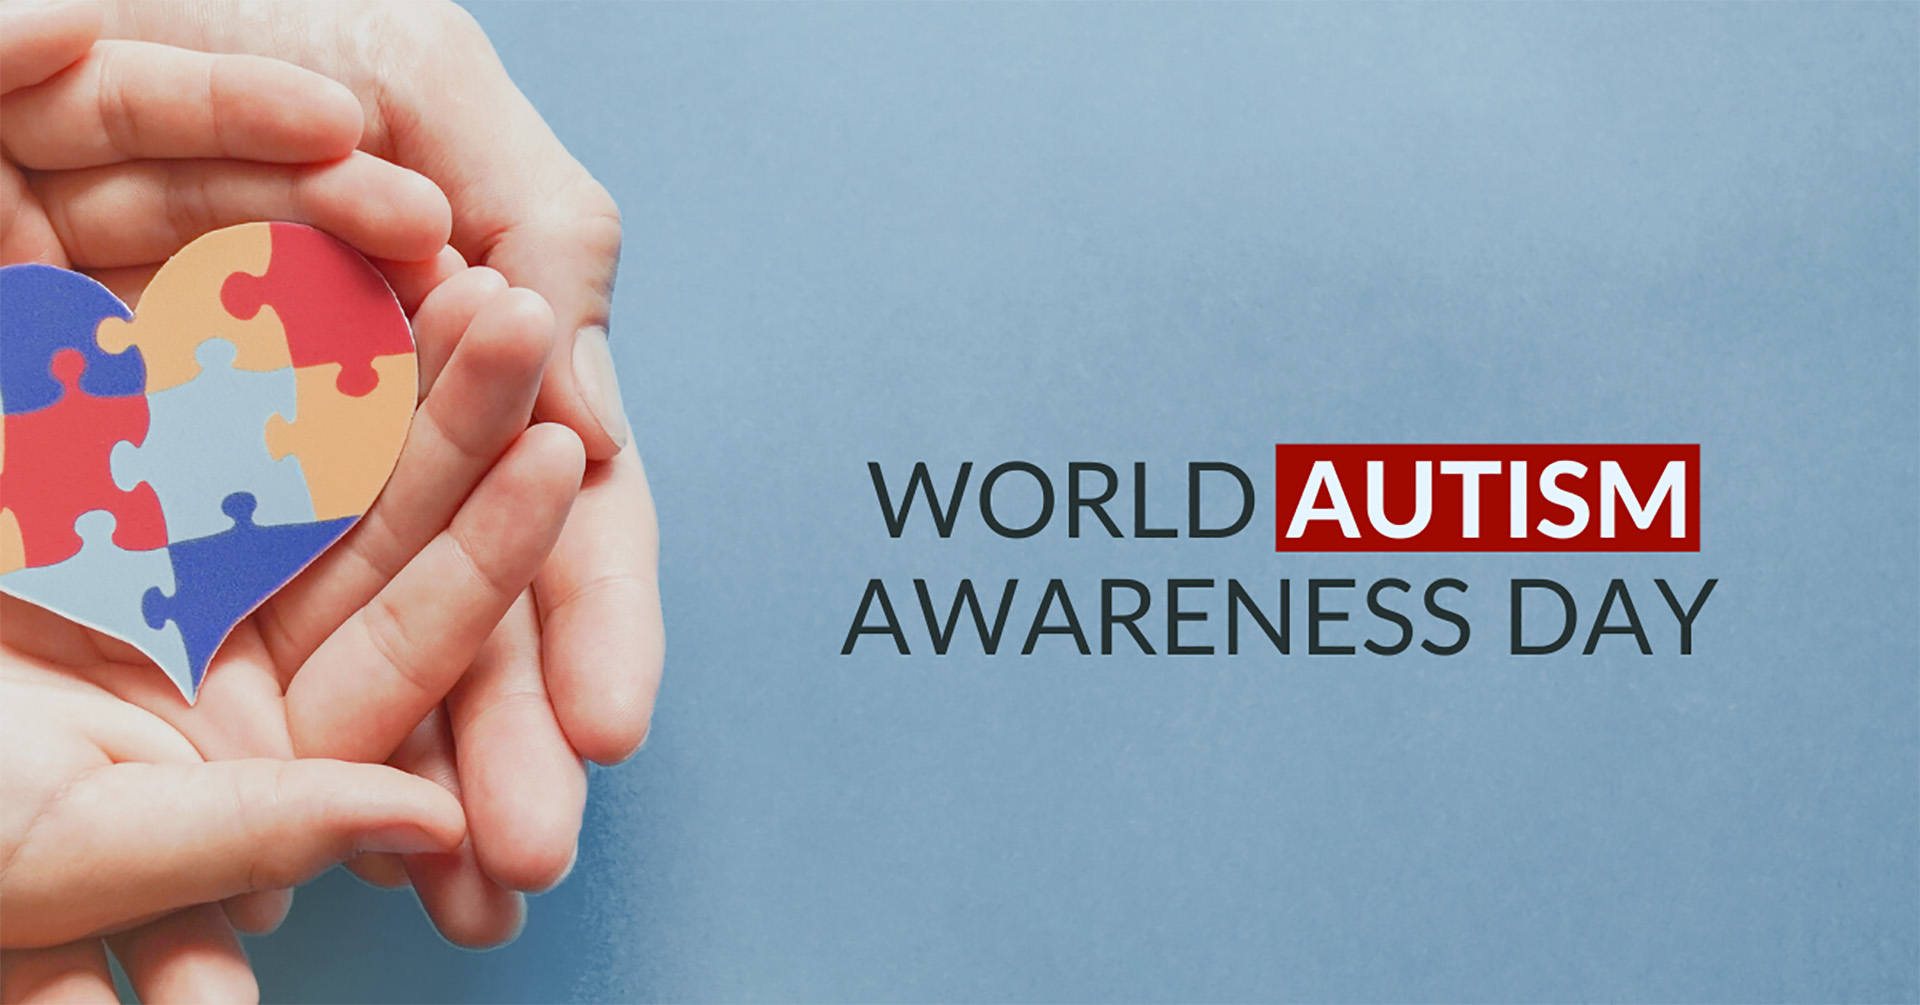 April 2 World Autism Awareness Day Digital Signage Graphic